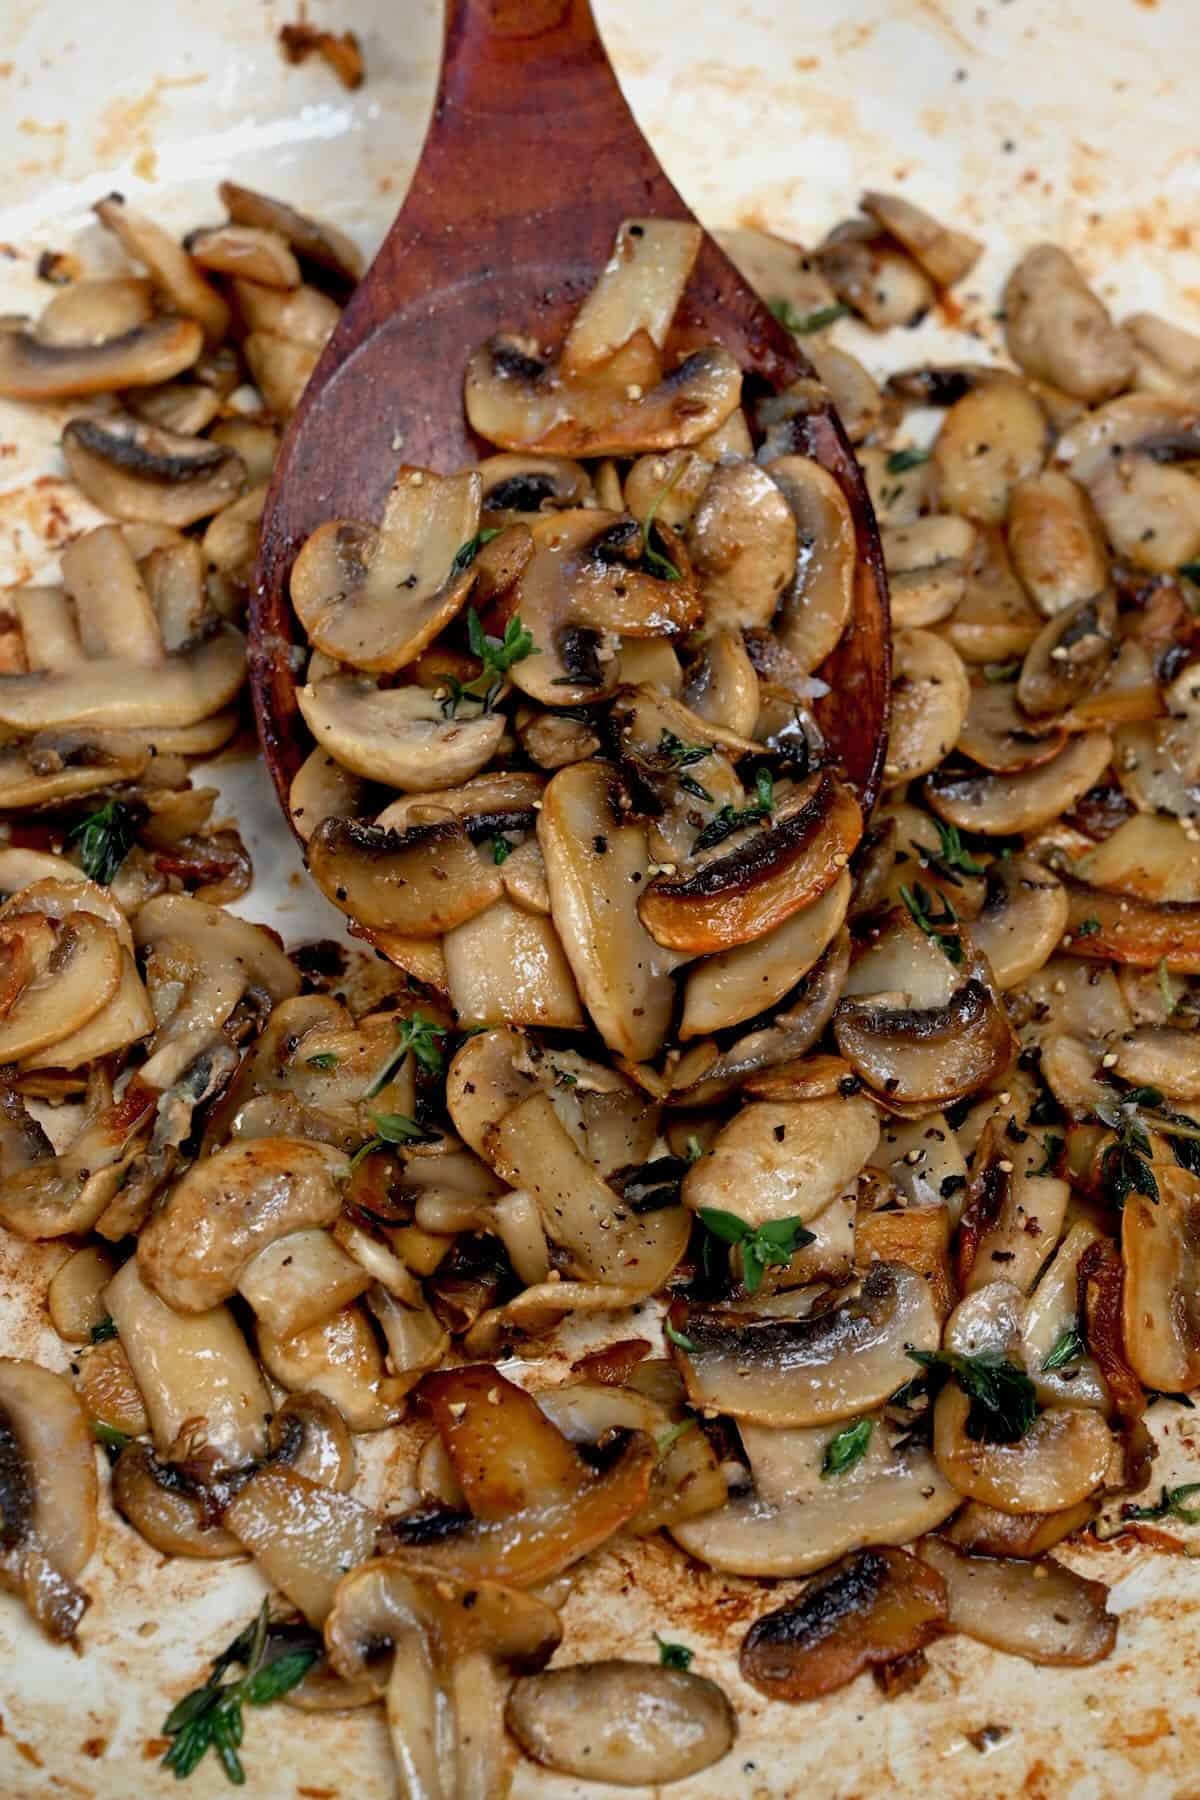 A spoonful of sauteed mushrooms